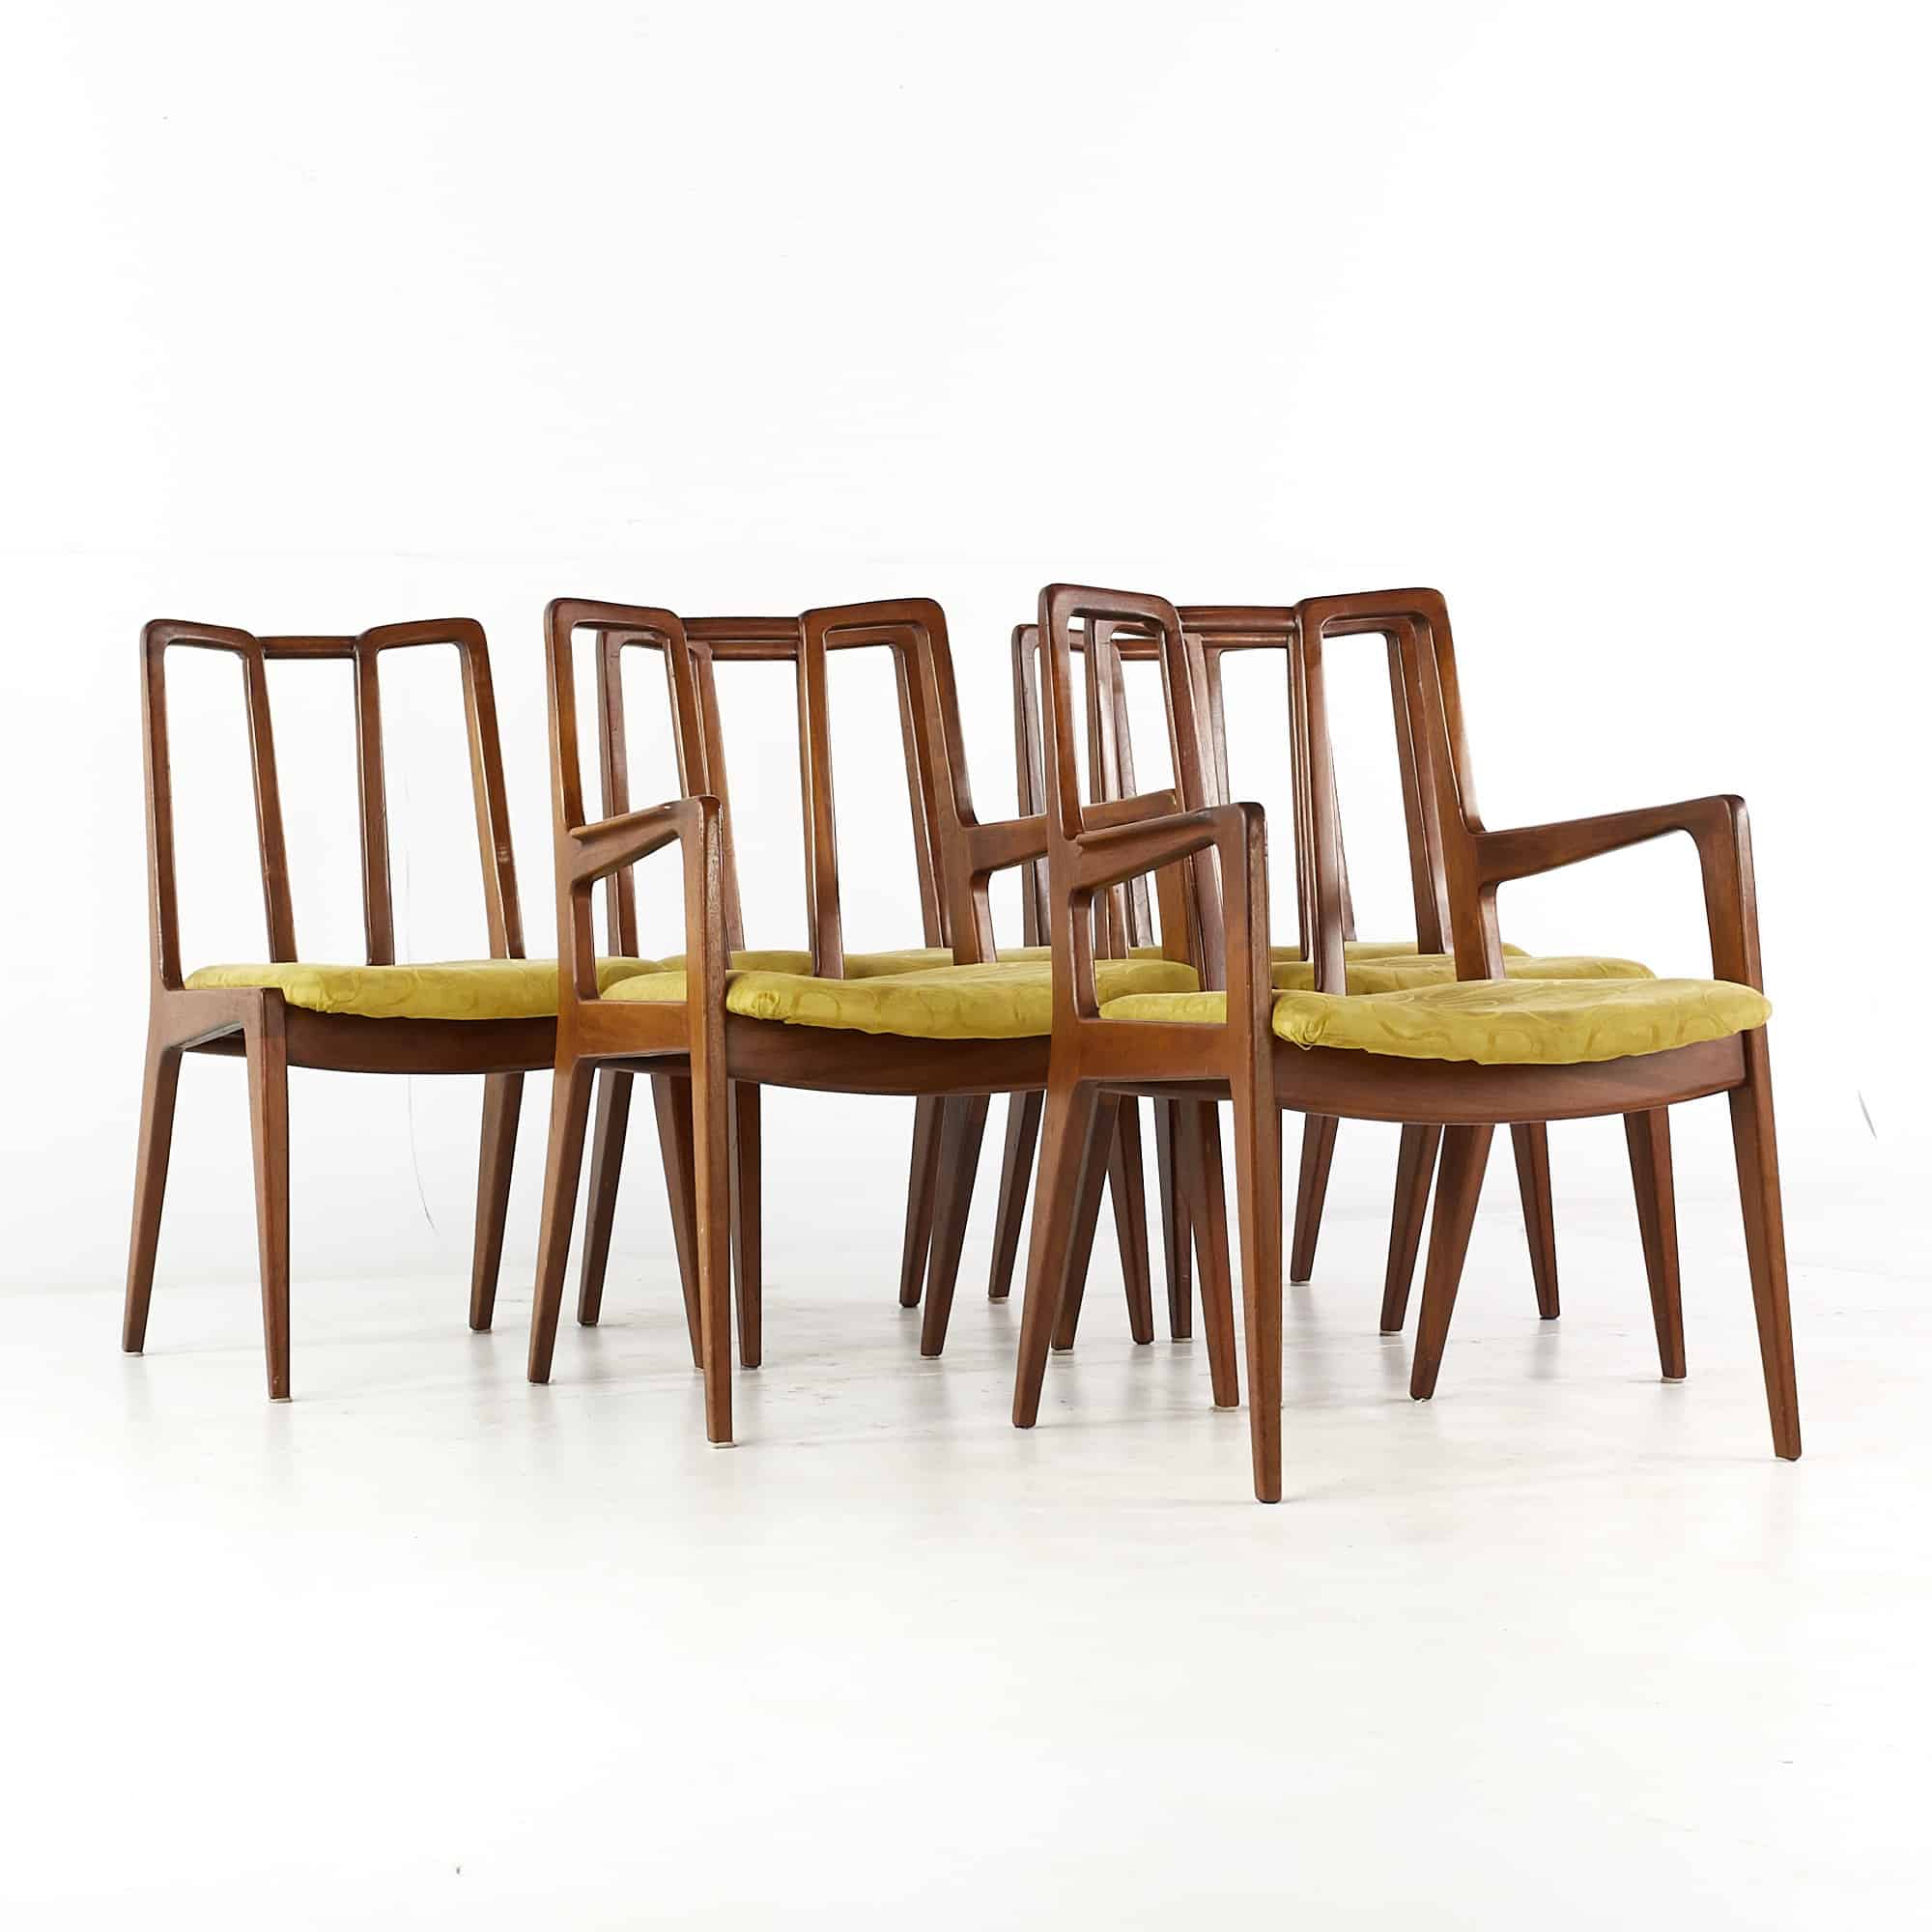 Mount Airy Janus Mid Century Walnut Dining Chairs - Set of 6